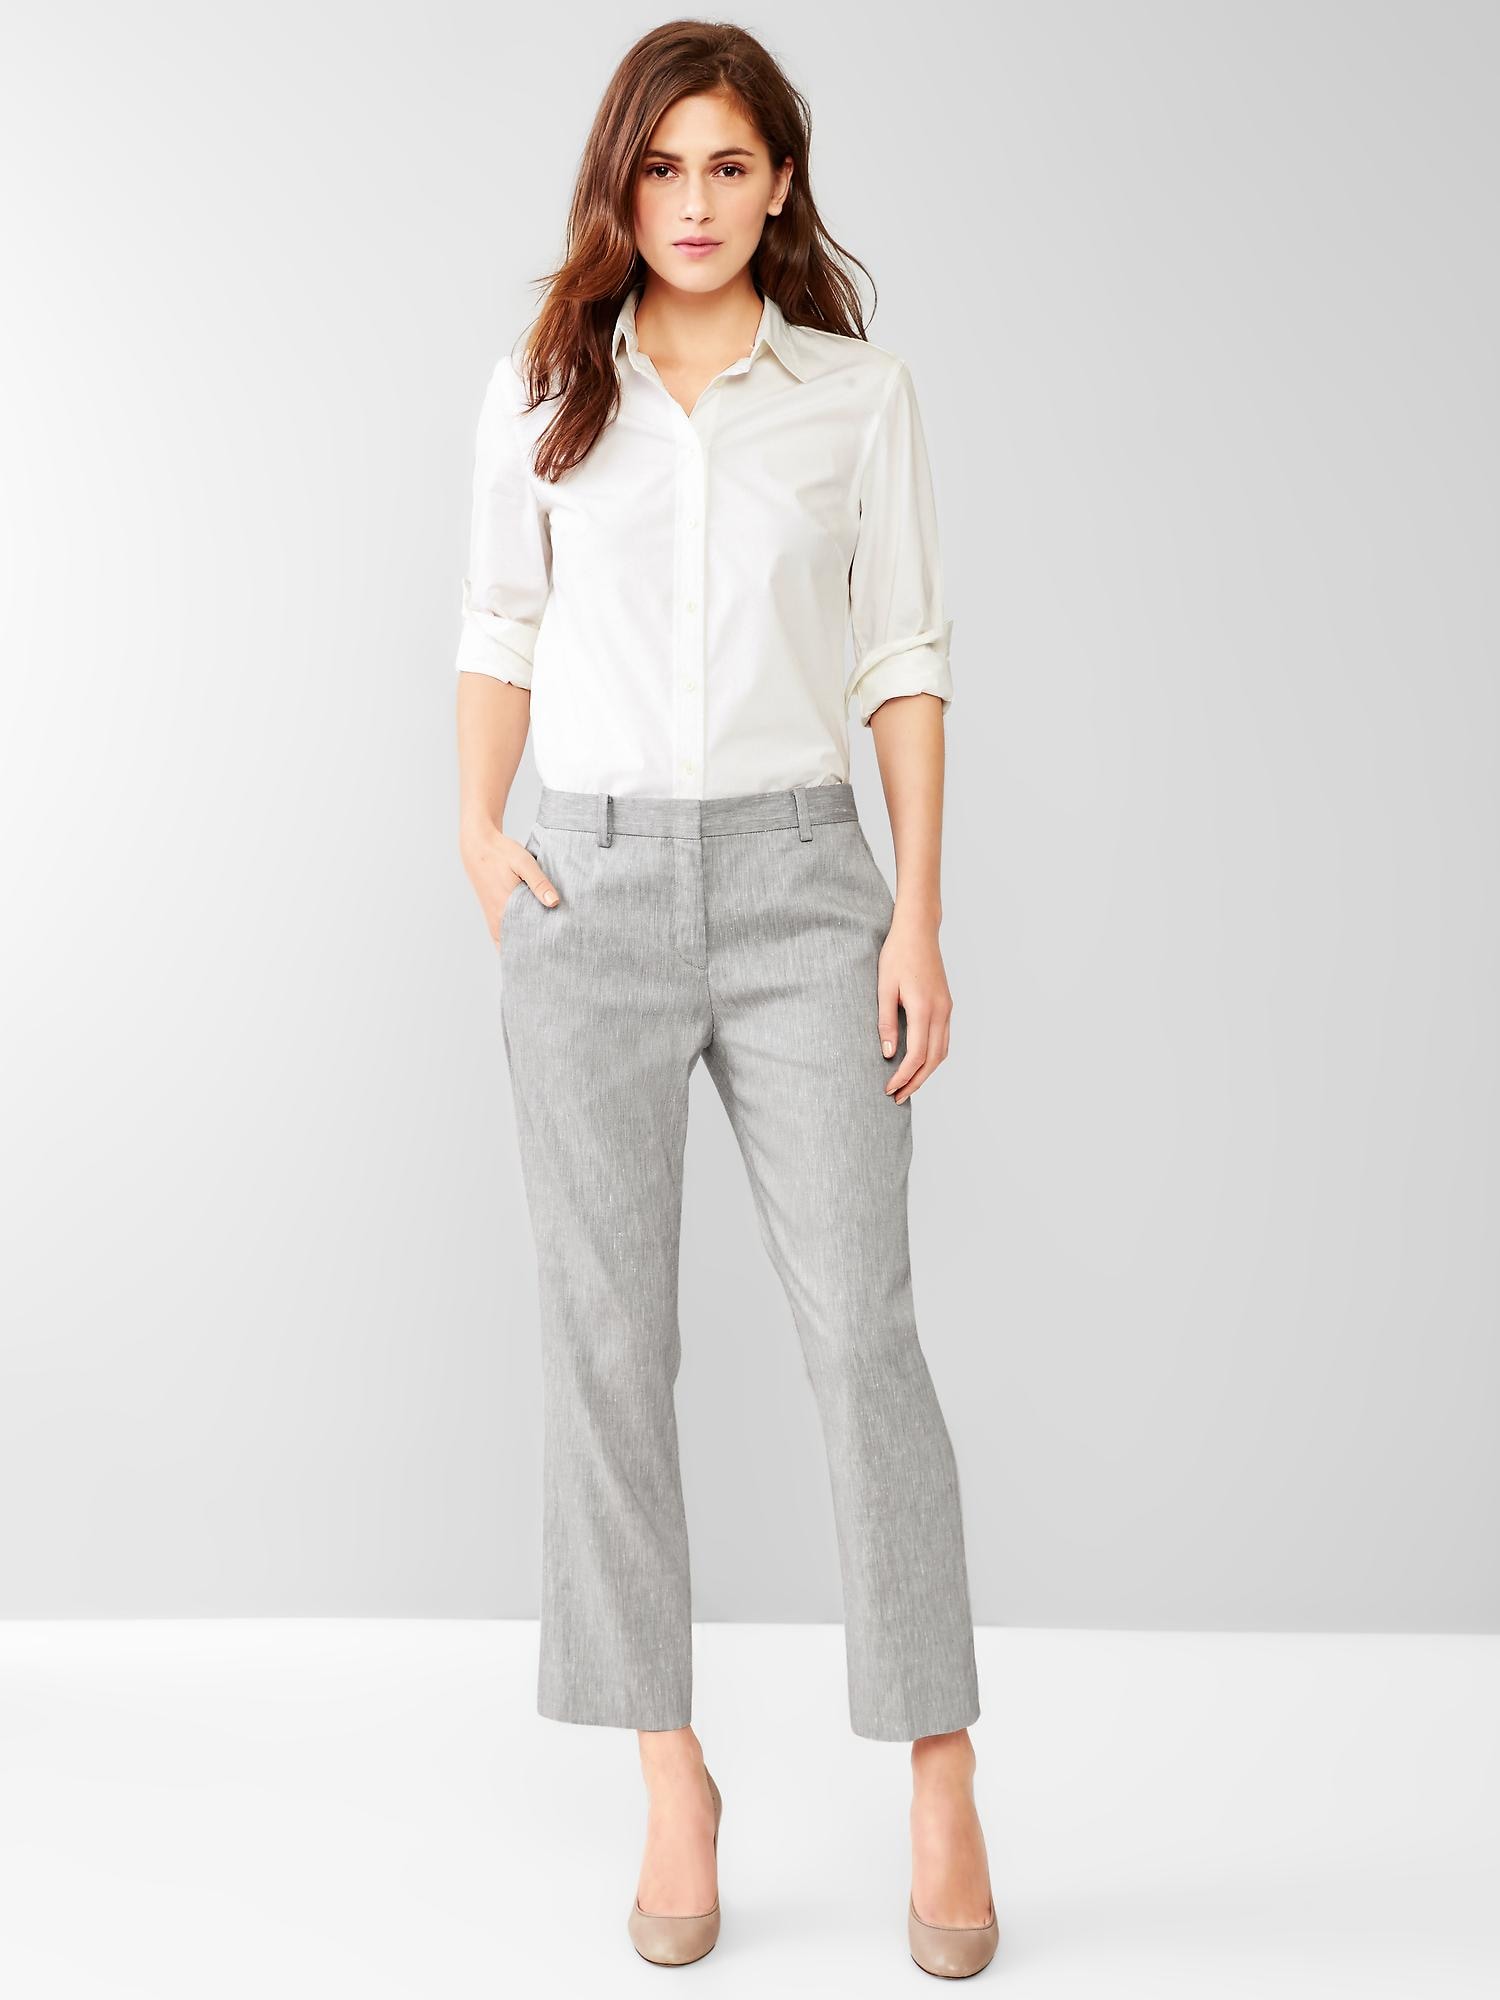 Gap Tailored Crop Stretch Women's White Pants Size 2R | eBay